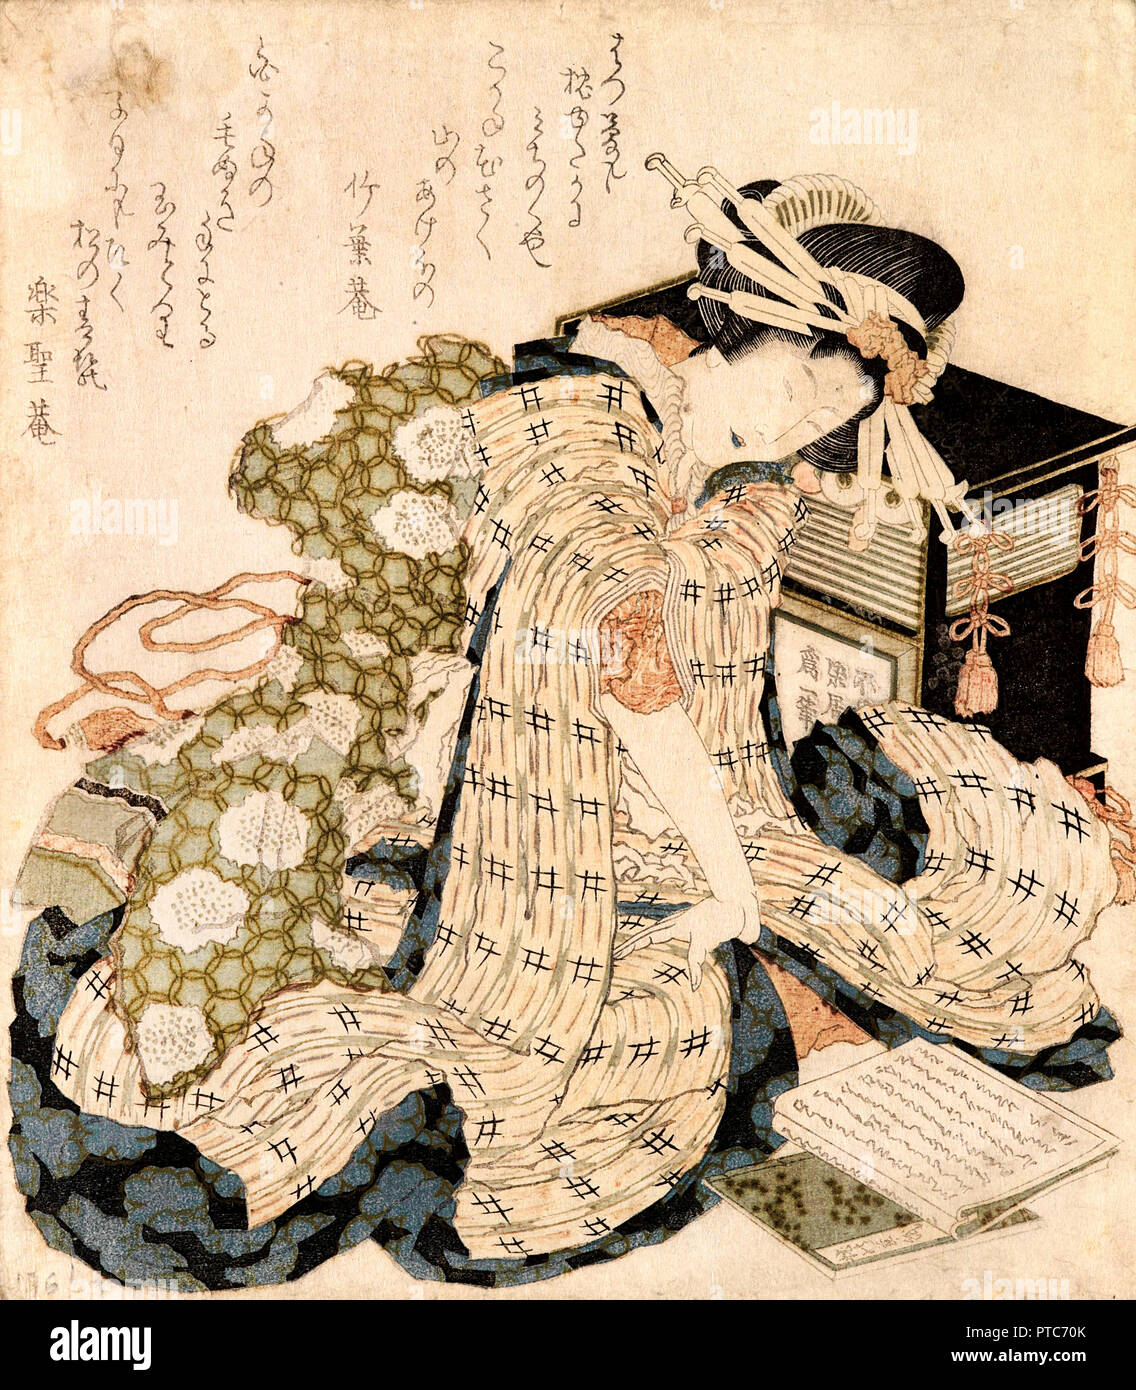 Katsushika Hokusai, Courtesan Asleep, Late 18th century - early 19th century, Color woodblock print, Bilbao Fine Arts Museum, Bilbao, Spain. Stock Photo